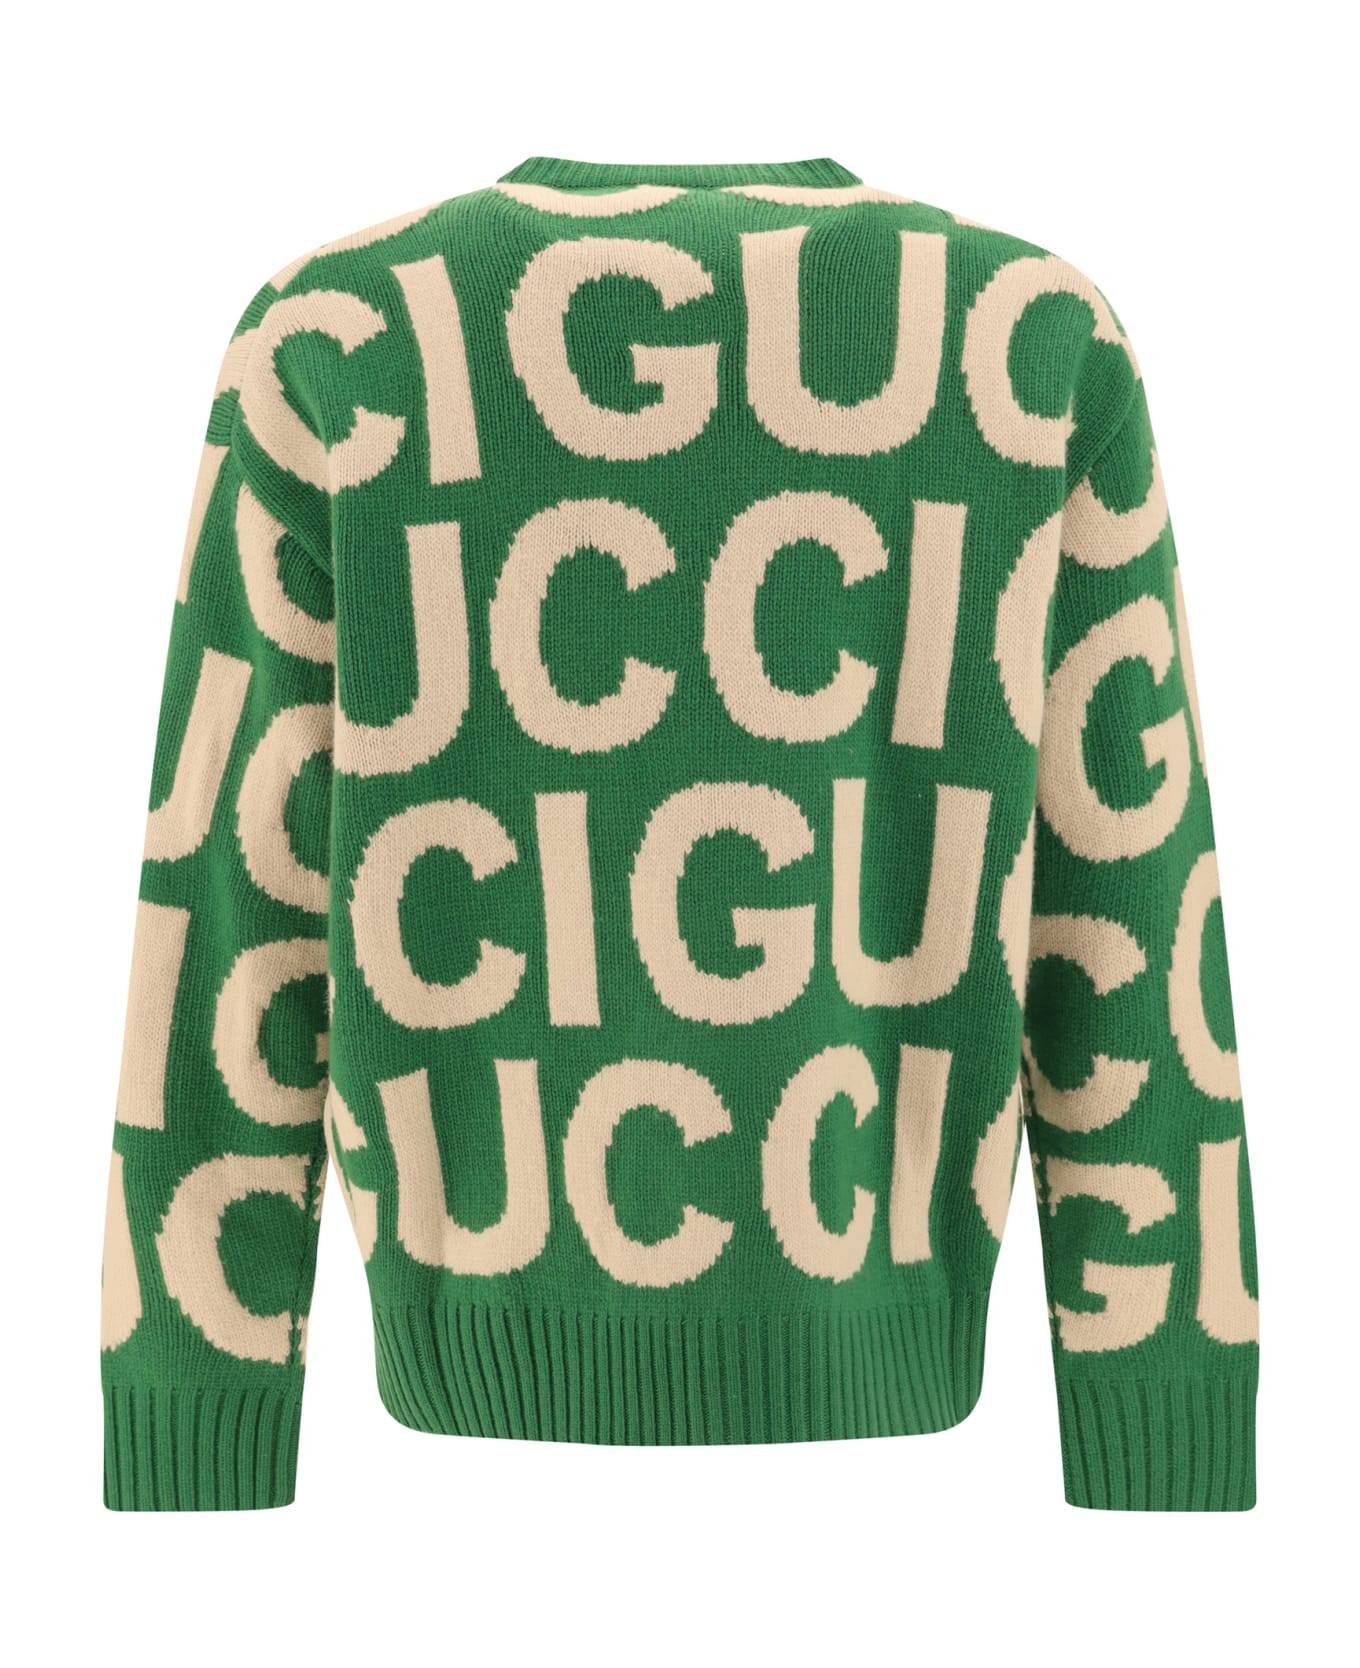 Gucci Orange Sweater - Yard/ivory